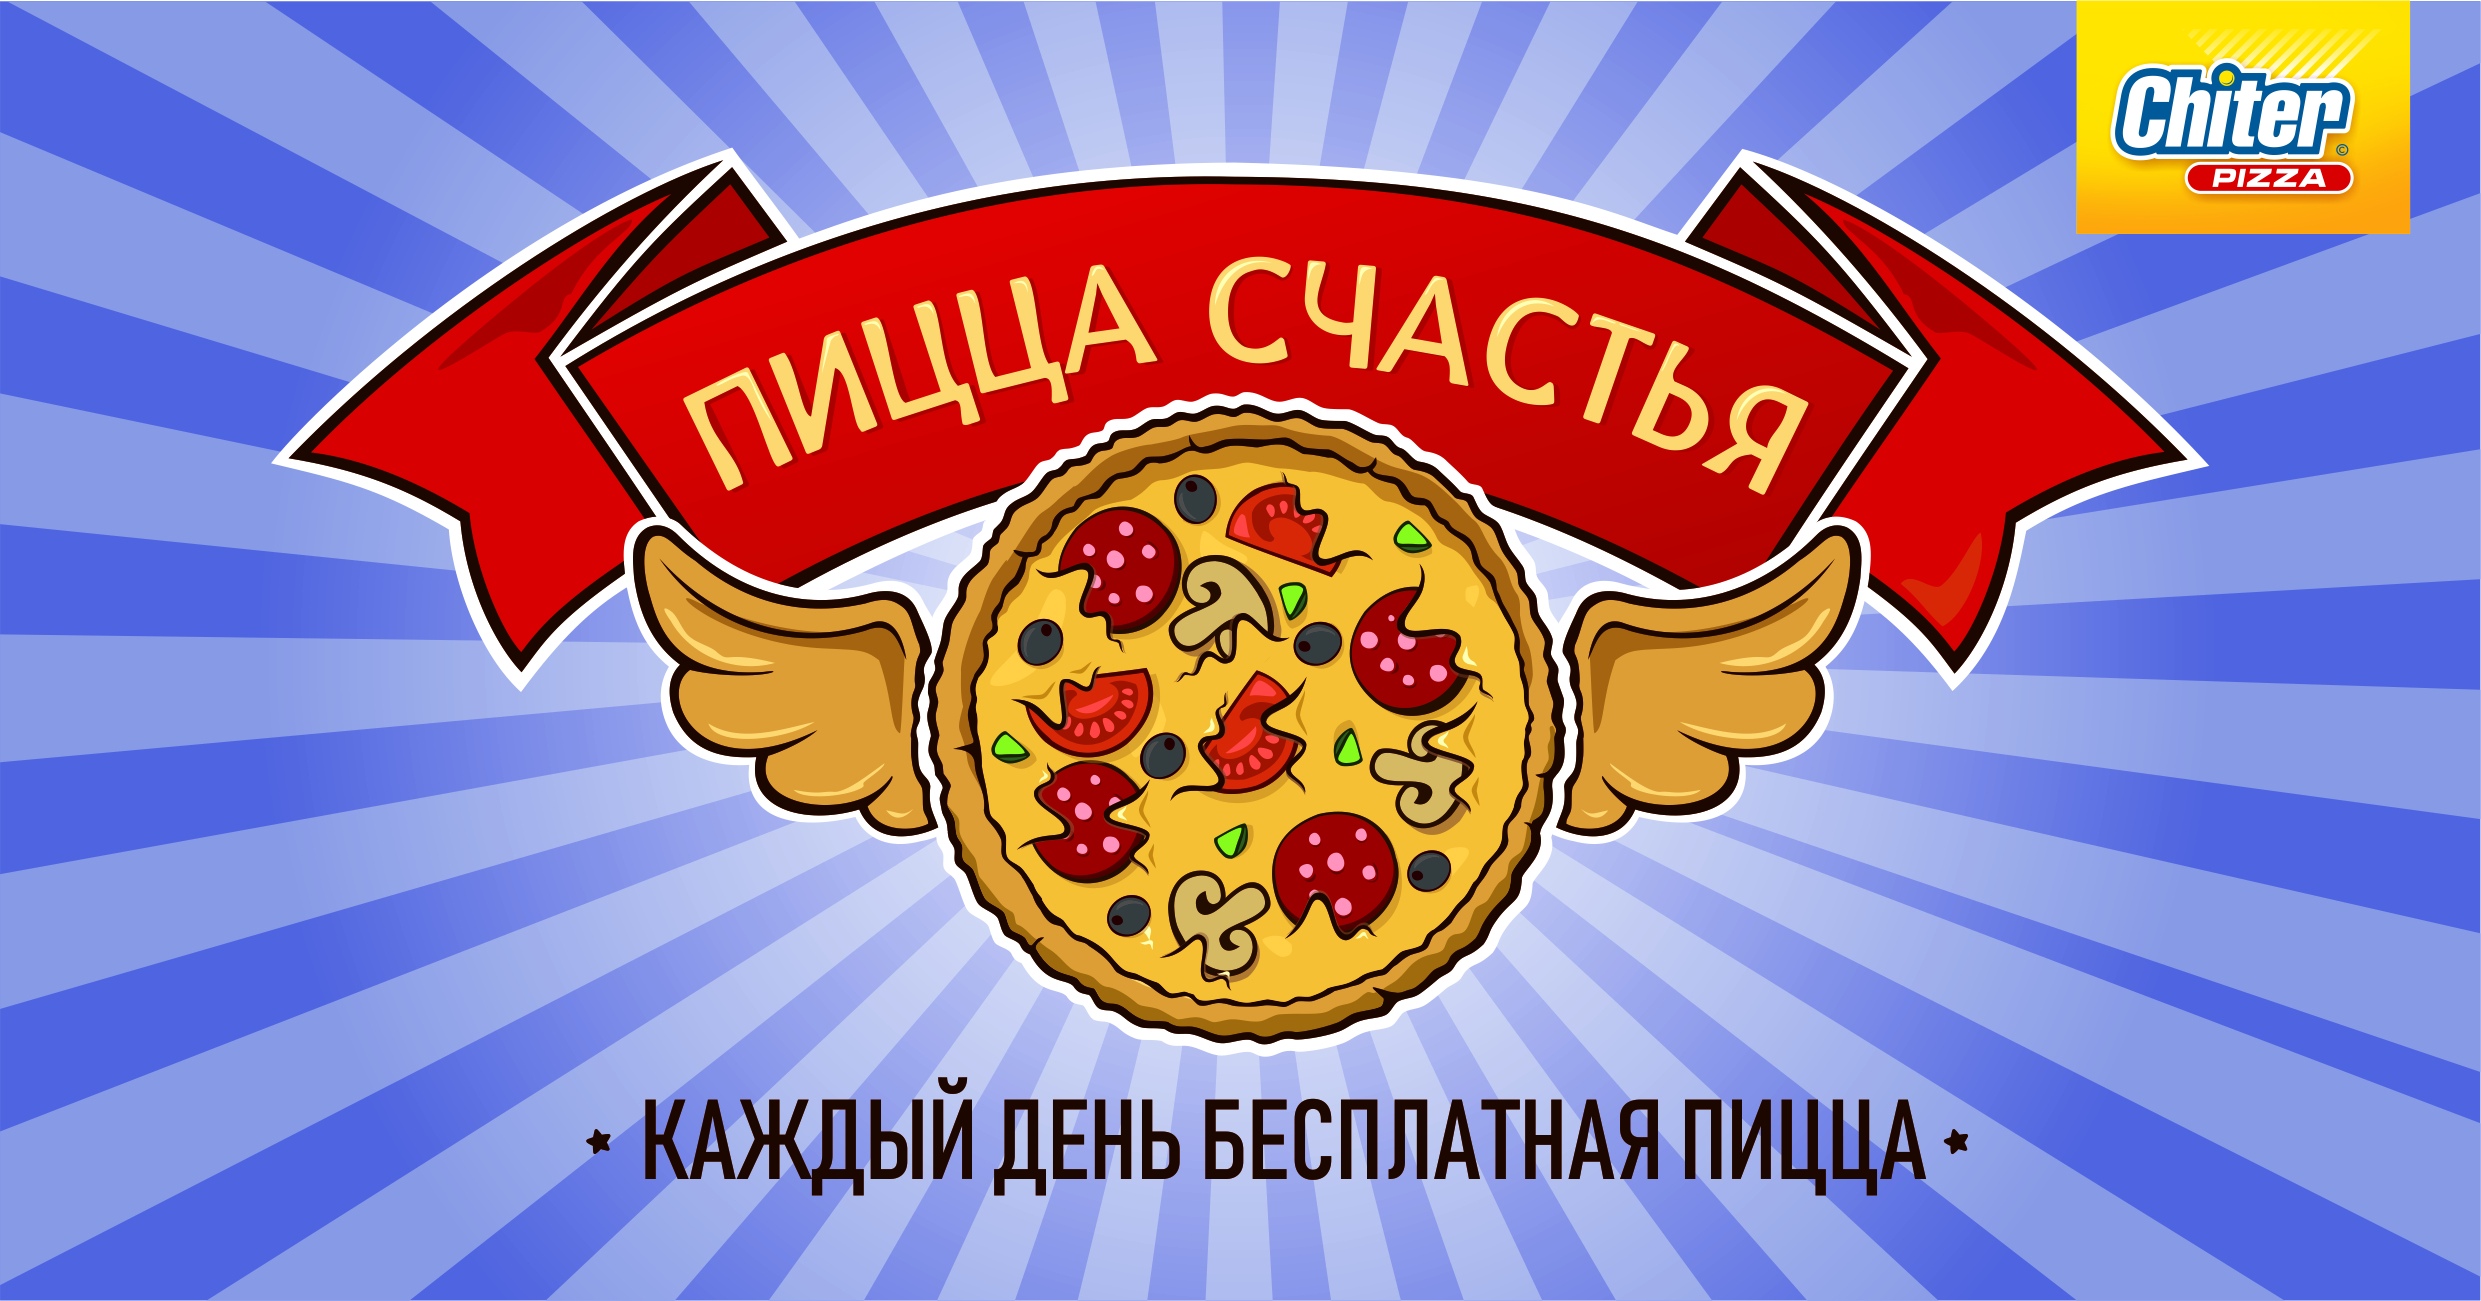 Сайт читер пицца. ЧИТЕР пицца. Пицца счастья. Счастье пиццерия. Пицца удача.